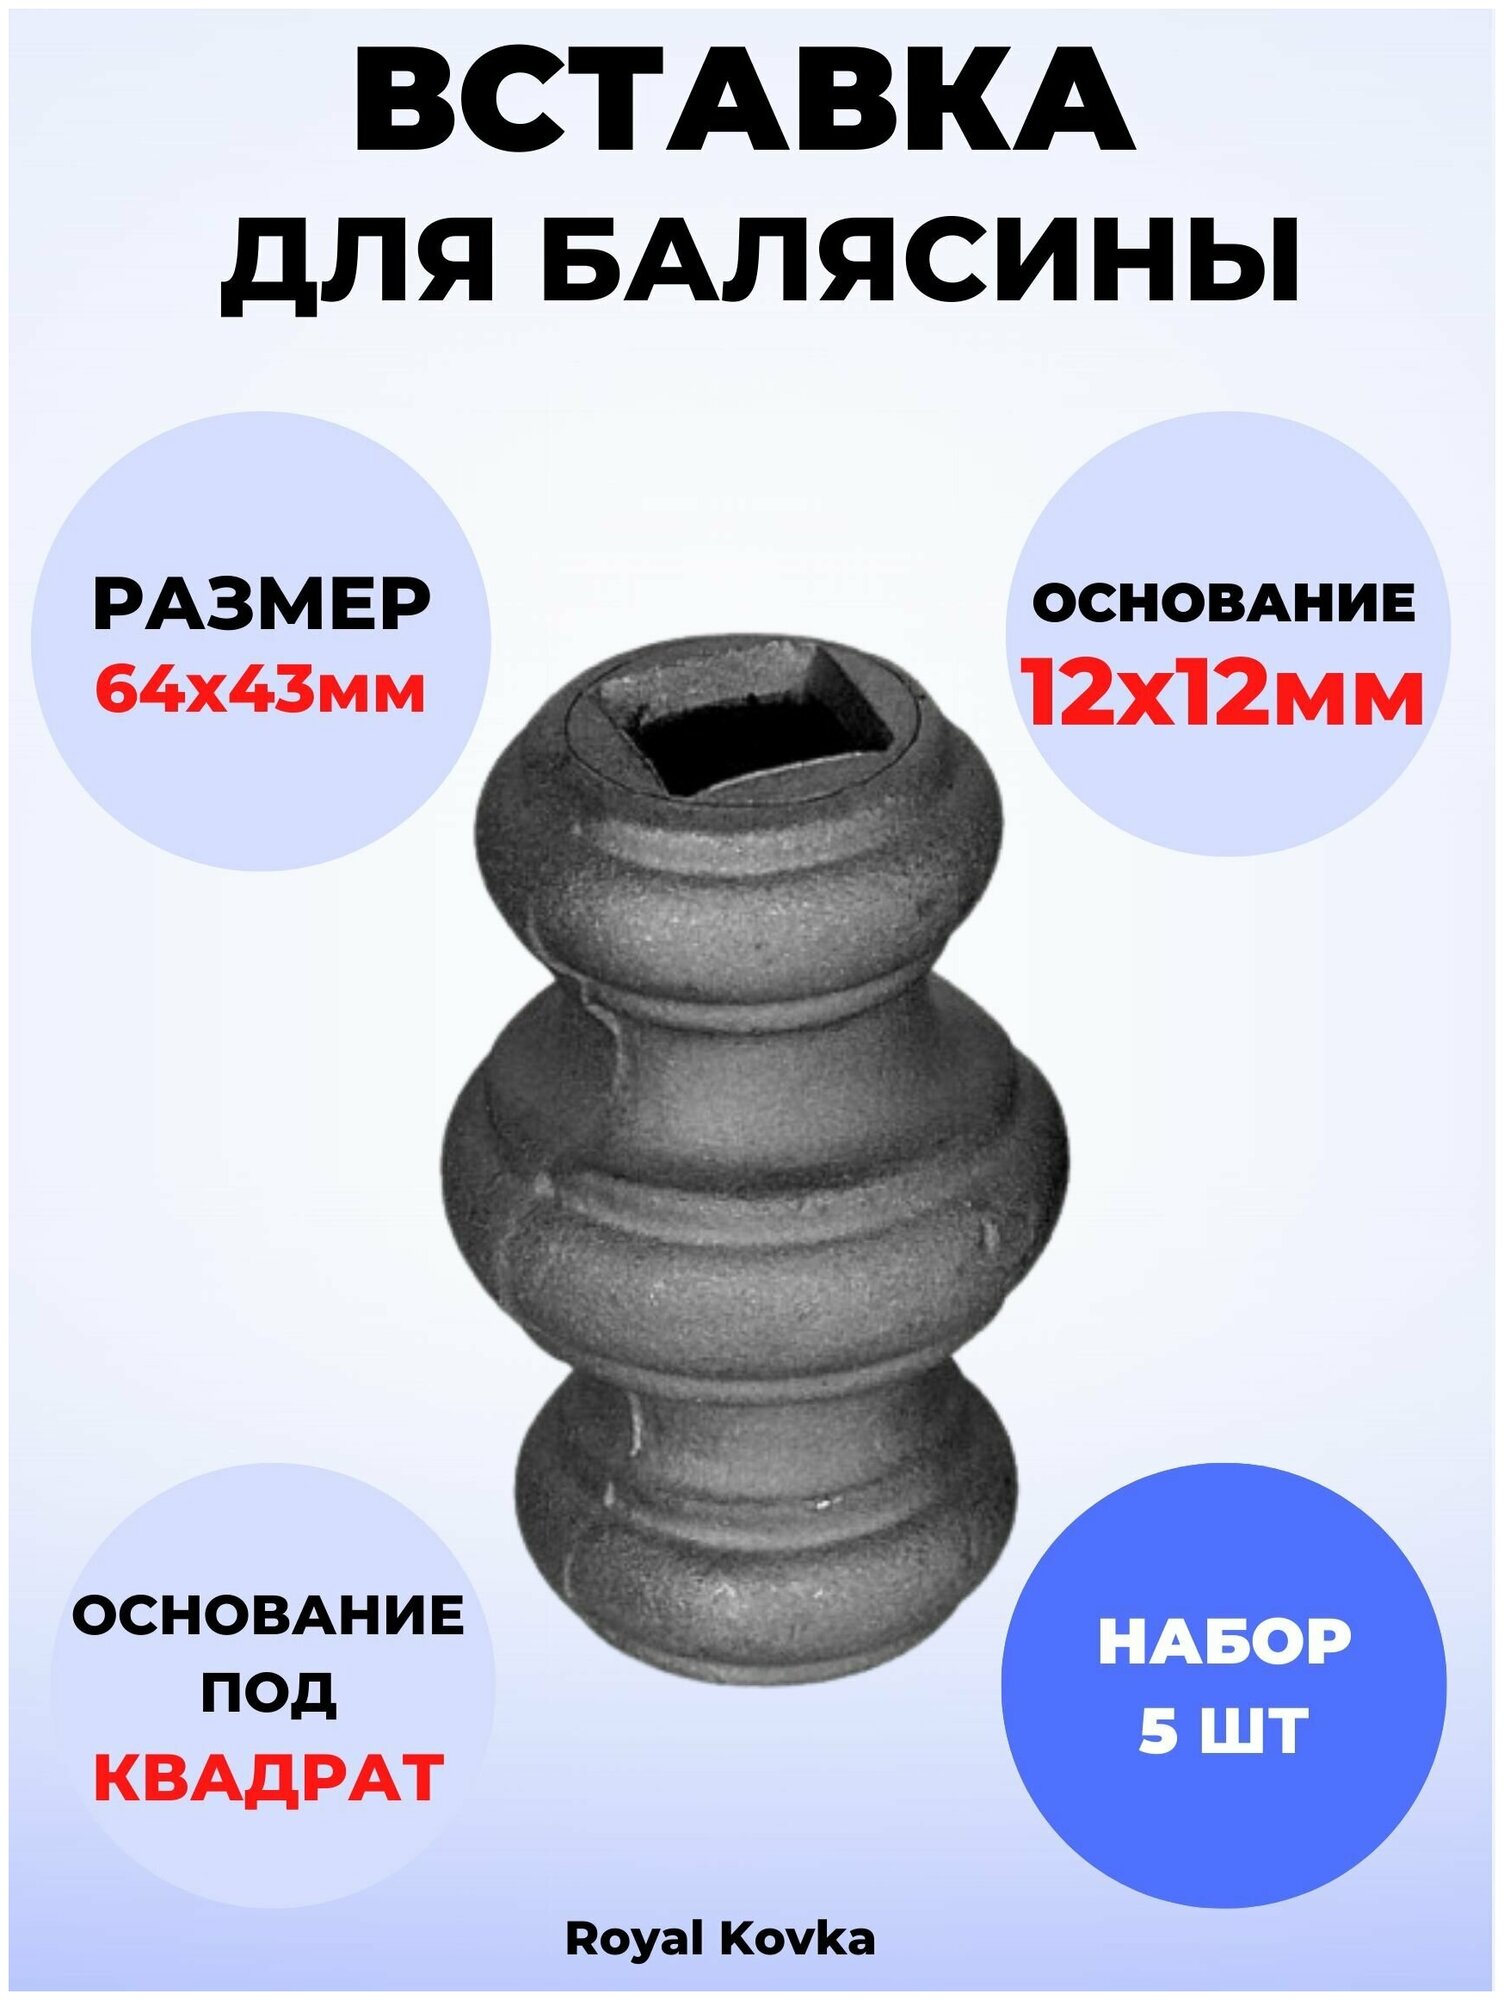 Кованый элемент Royal Kovka Вставка для балясины 64х43 мм под квадрат 12х12 мм Набор 5 шт арт ВСТ.0402-5 - фотография № 1